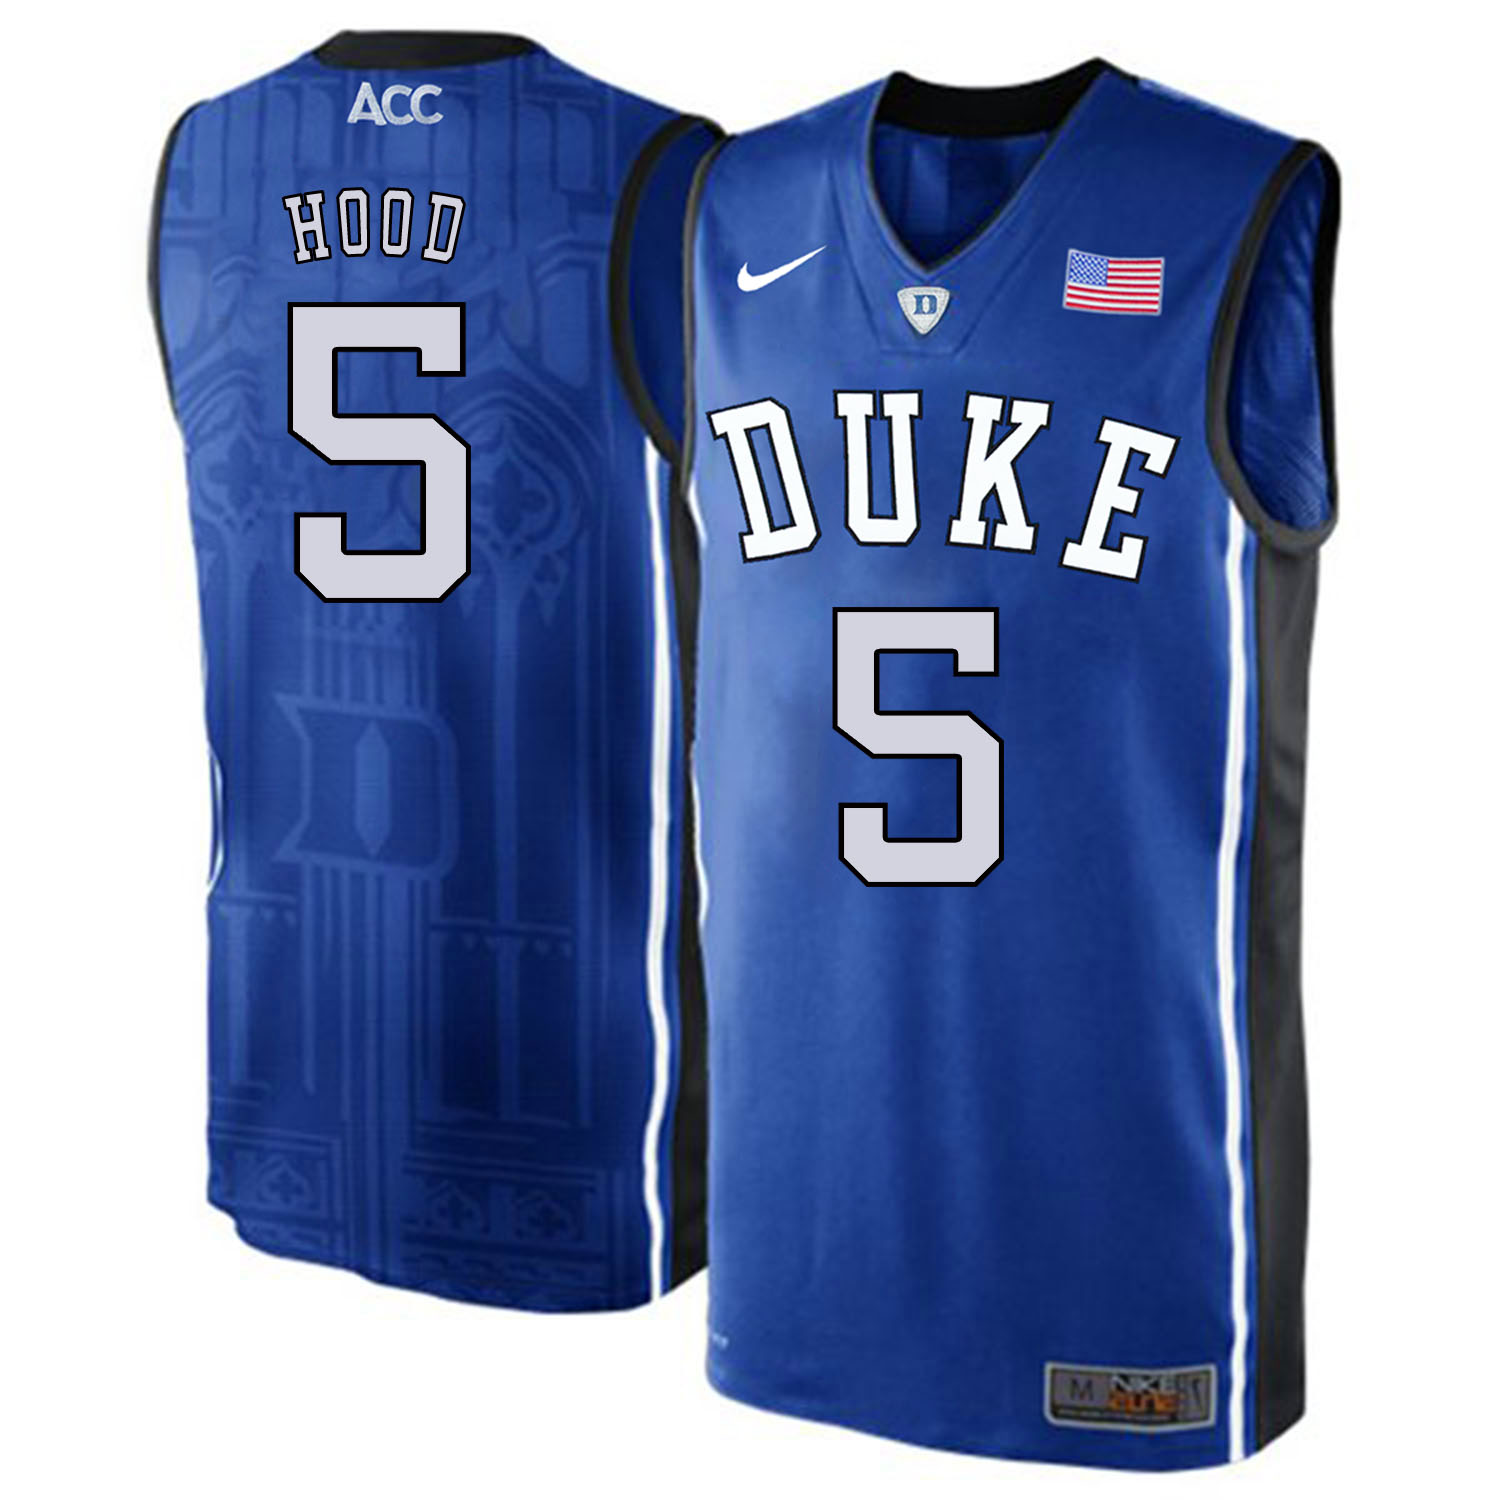 Duke Blue Devils 5 Rodney Hood Blue Elite Nike College Basketball Jersey